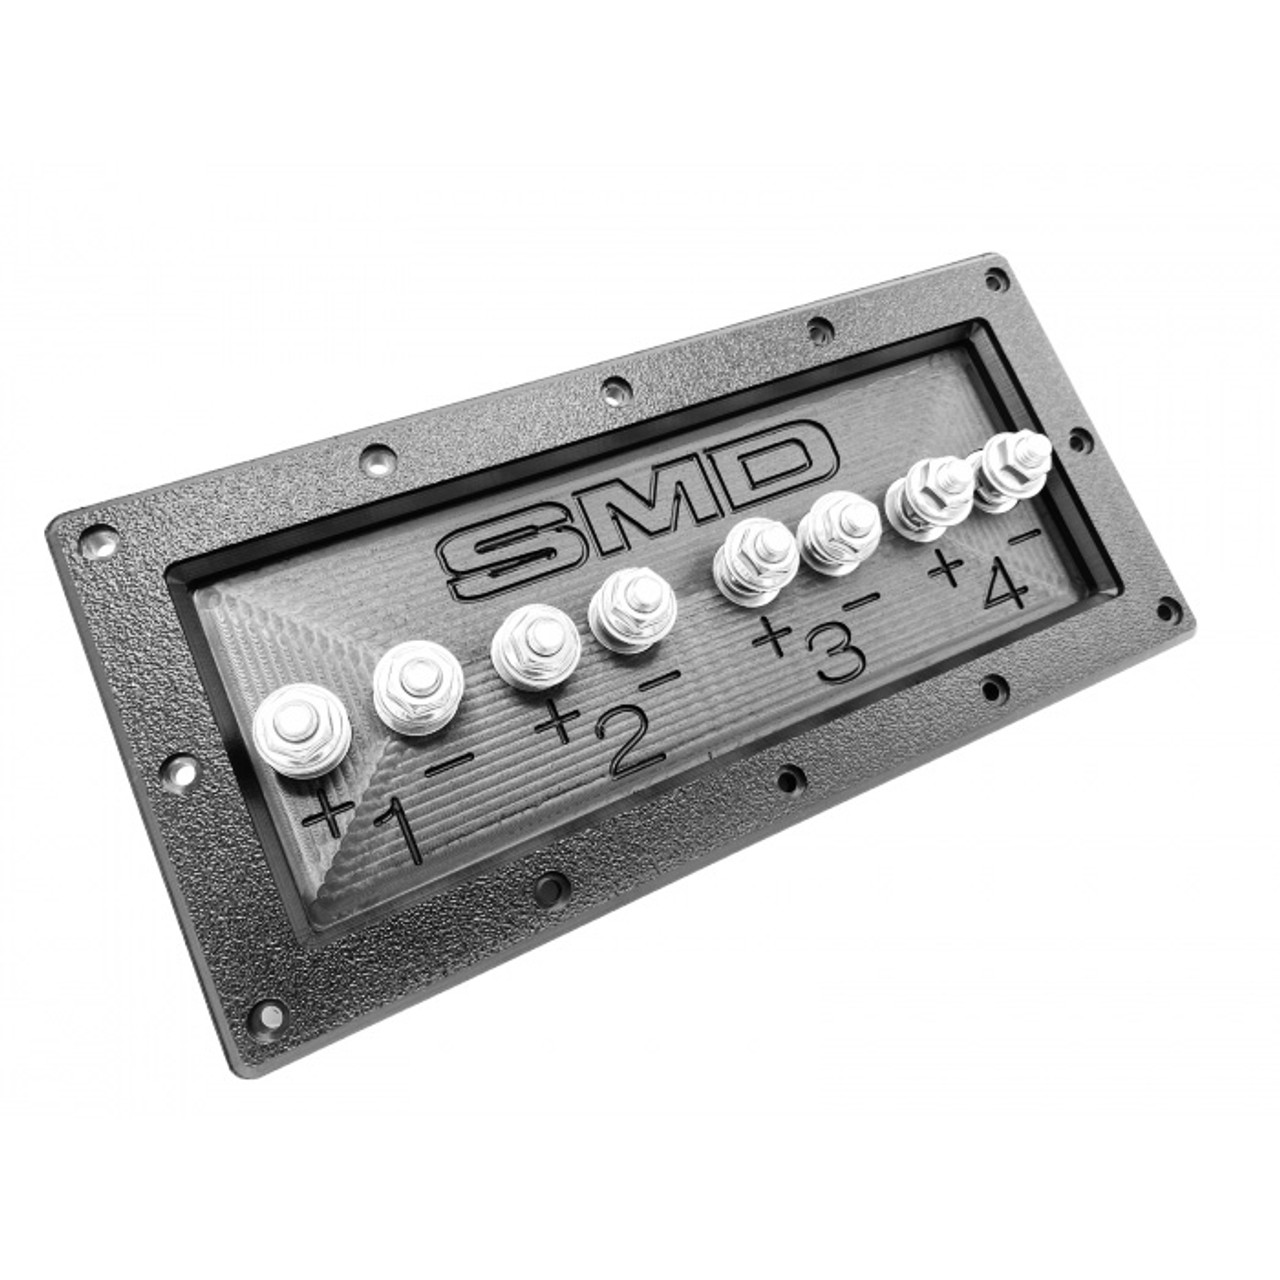 SMD 4 Channel Speaker Terminal - Steve Meade Designs